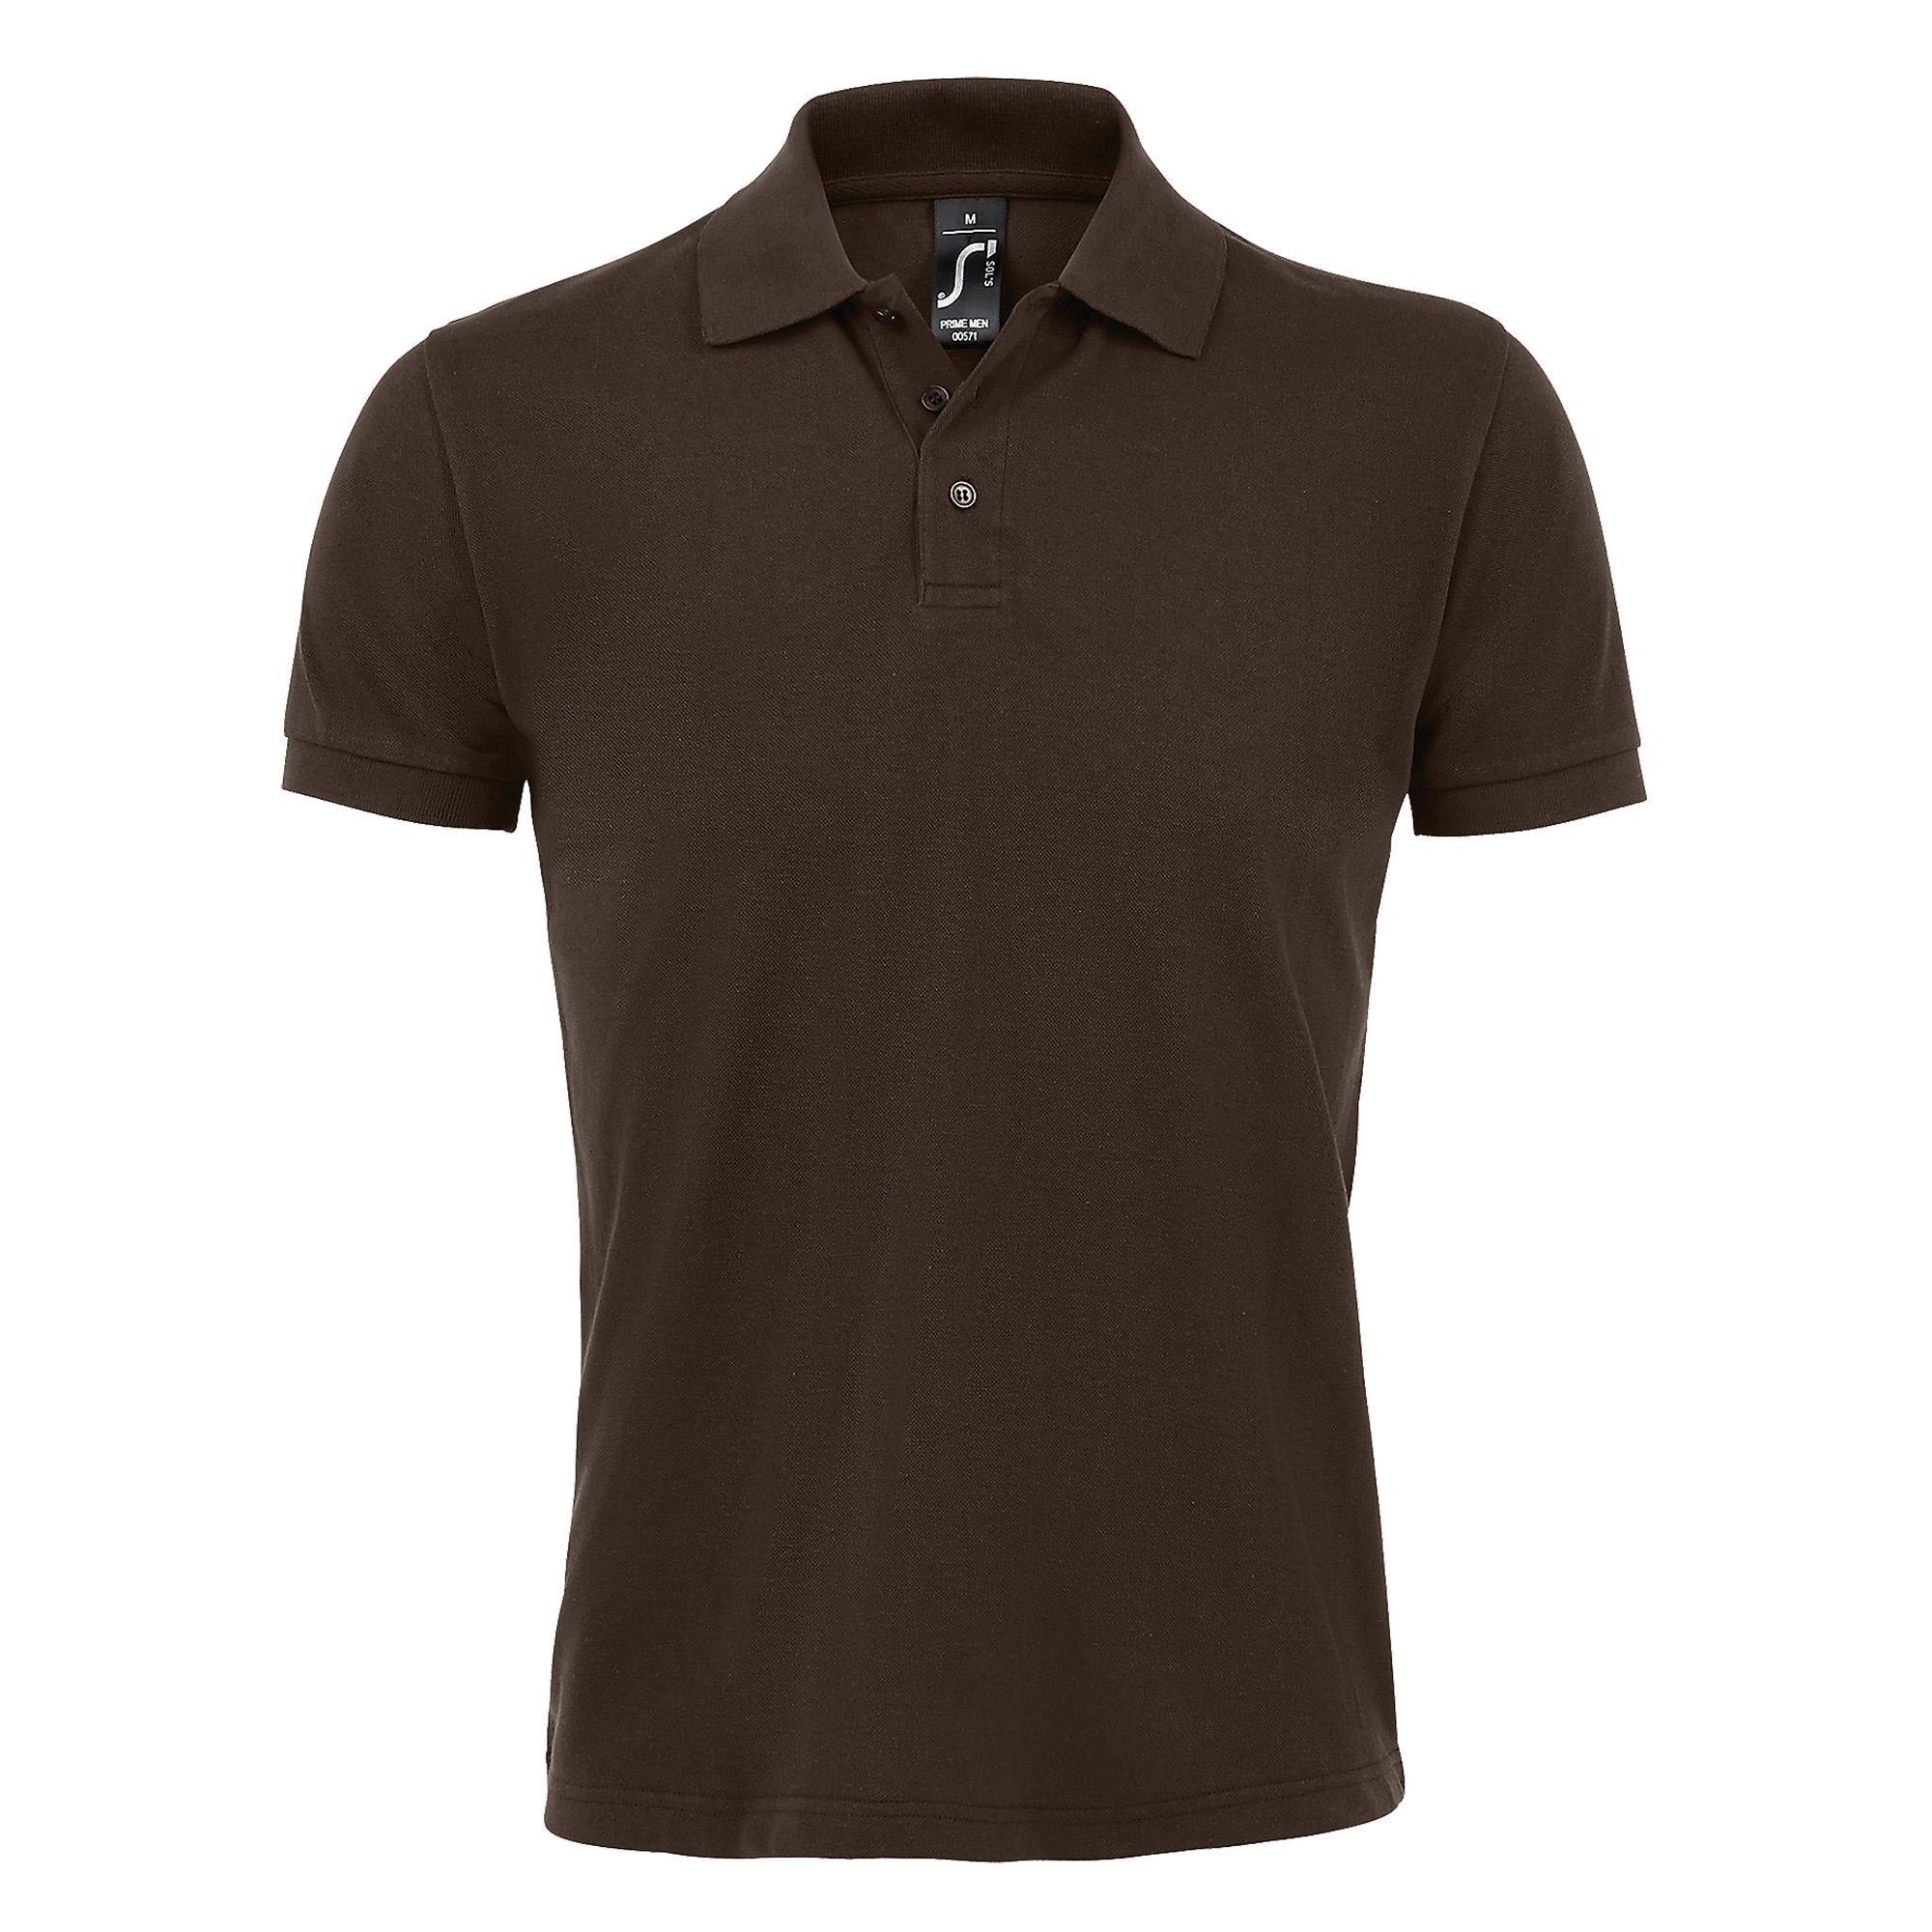 SOLs Mens Prime Pique Plain Short Sleeve Polo Shirt (Chocolate) (XL)